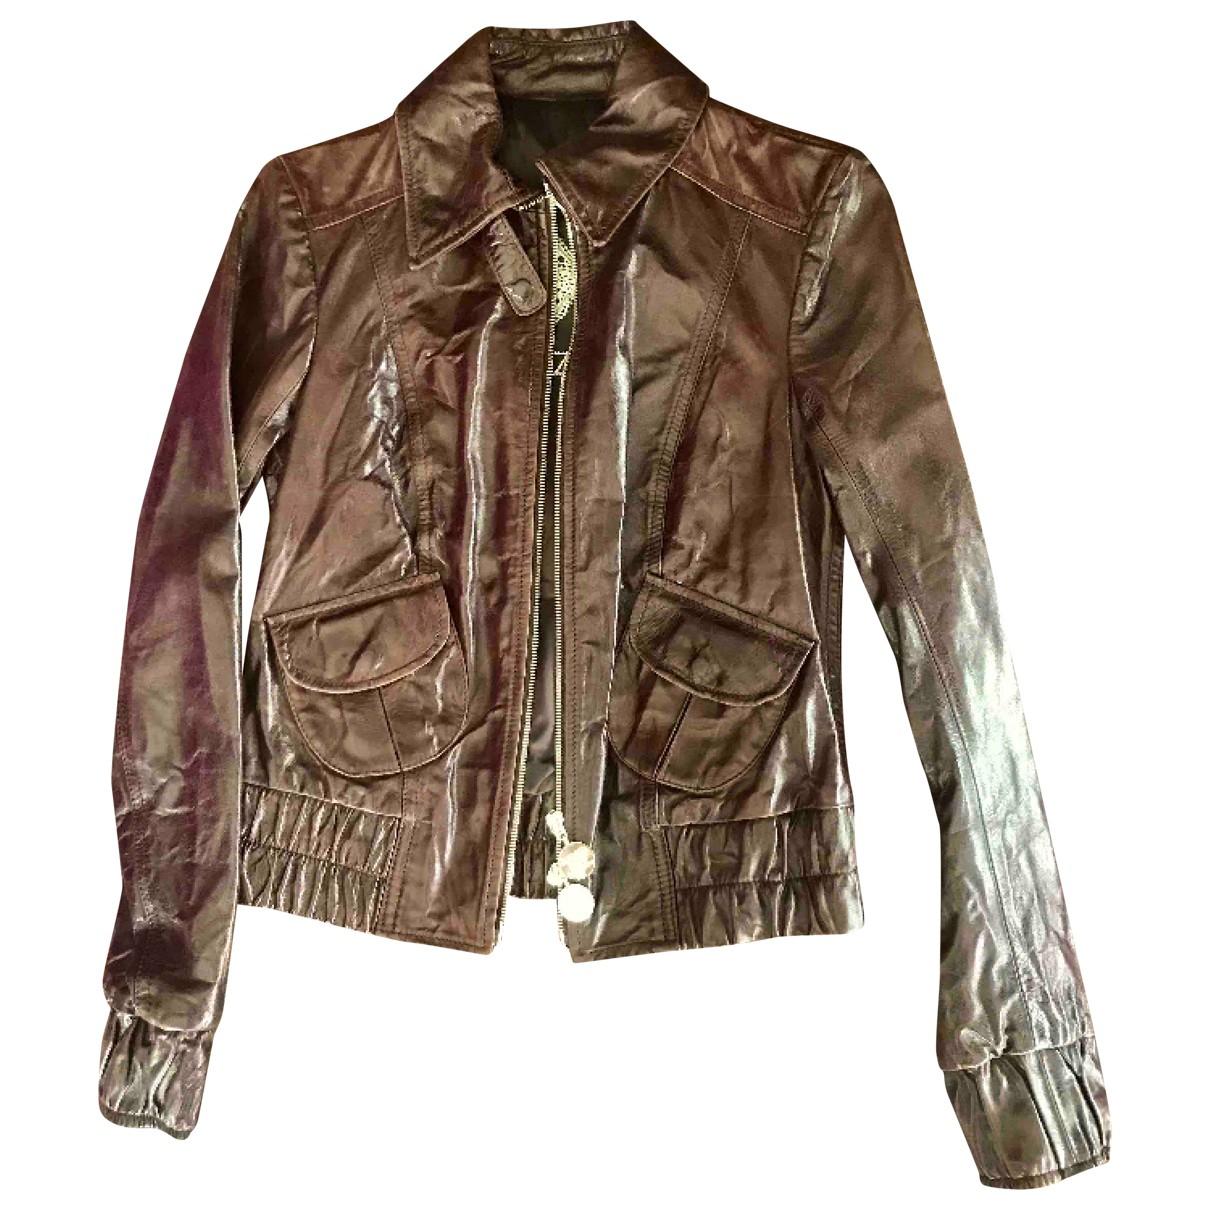 Patrizia Pepe Leather Biker Jacket in Brown - Lyst